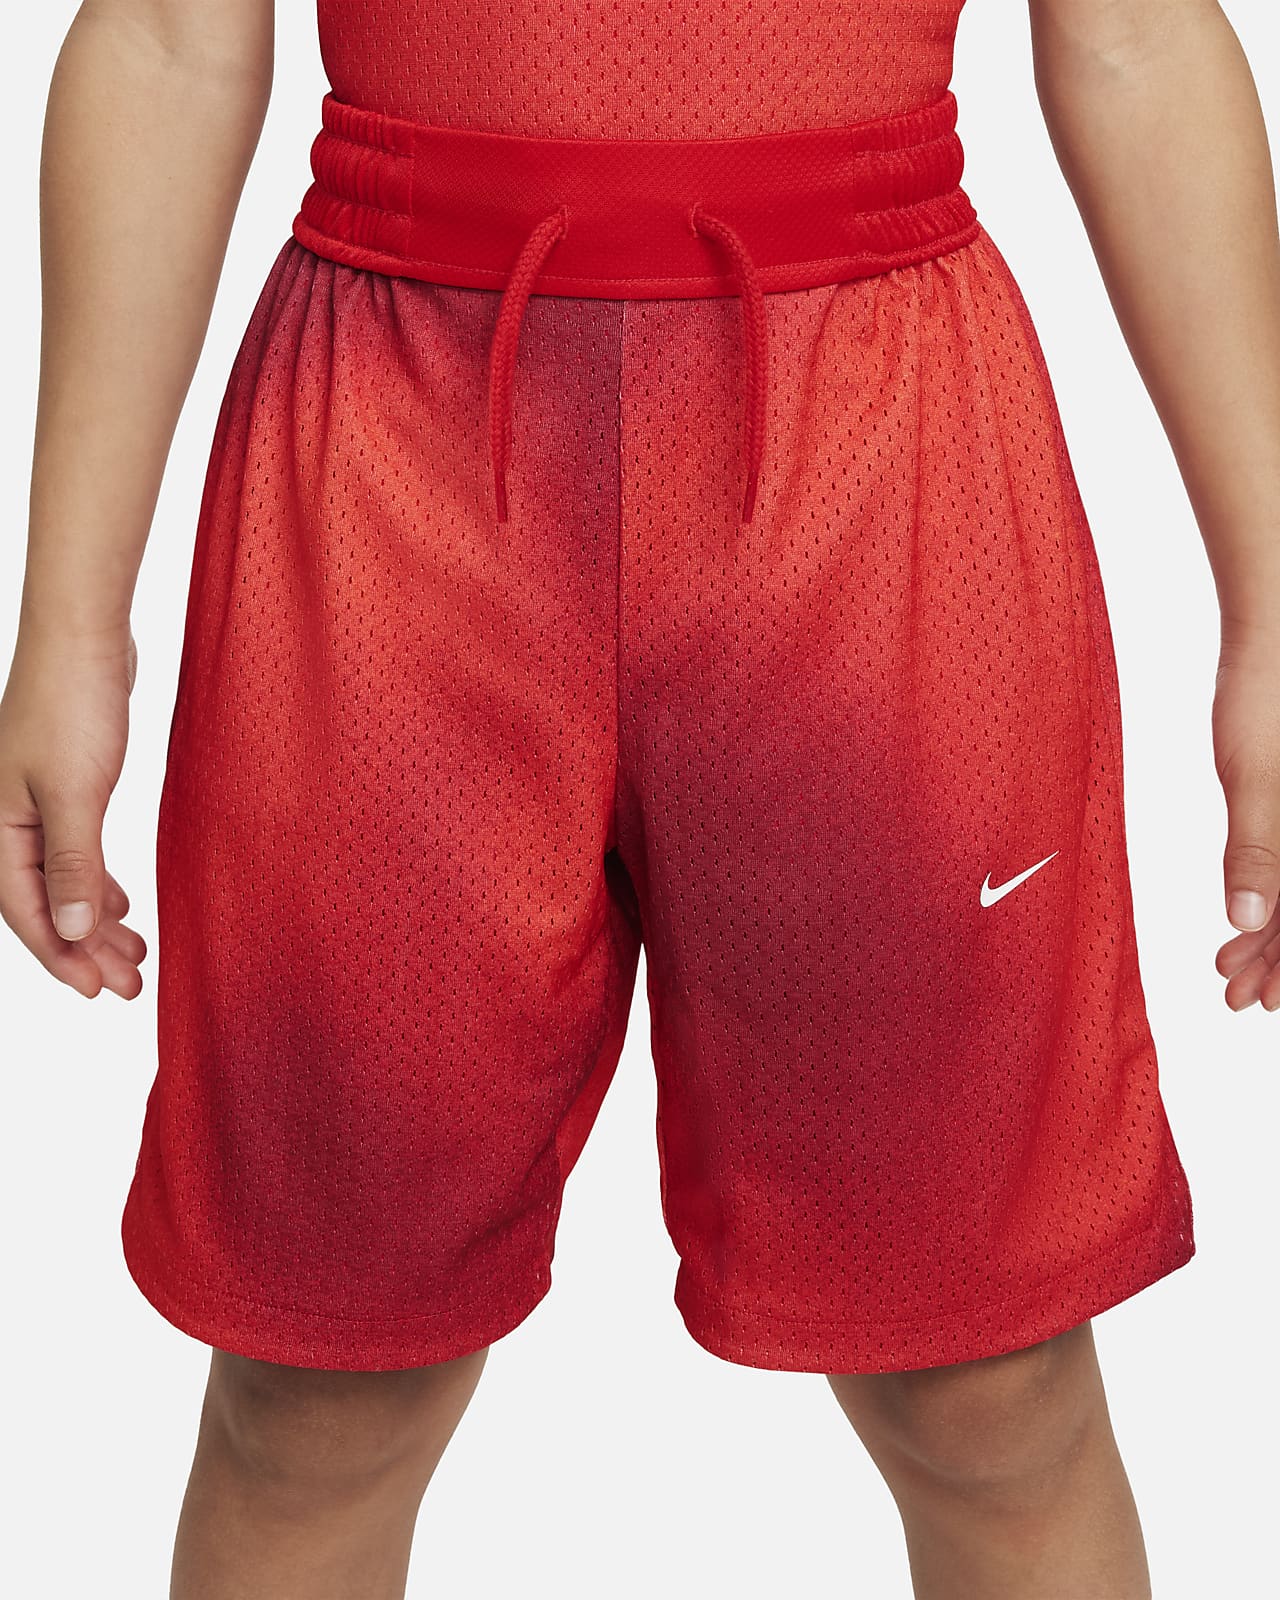 Nike Culture of Basketball DNA Older Kids' Reversible Basketball Shorts